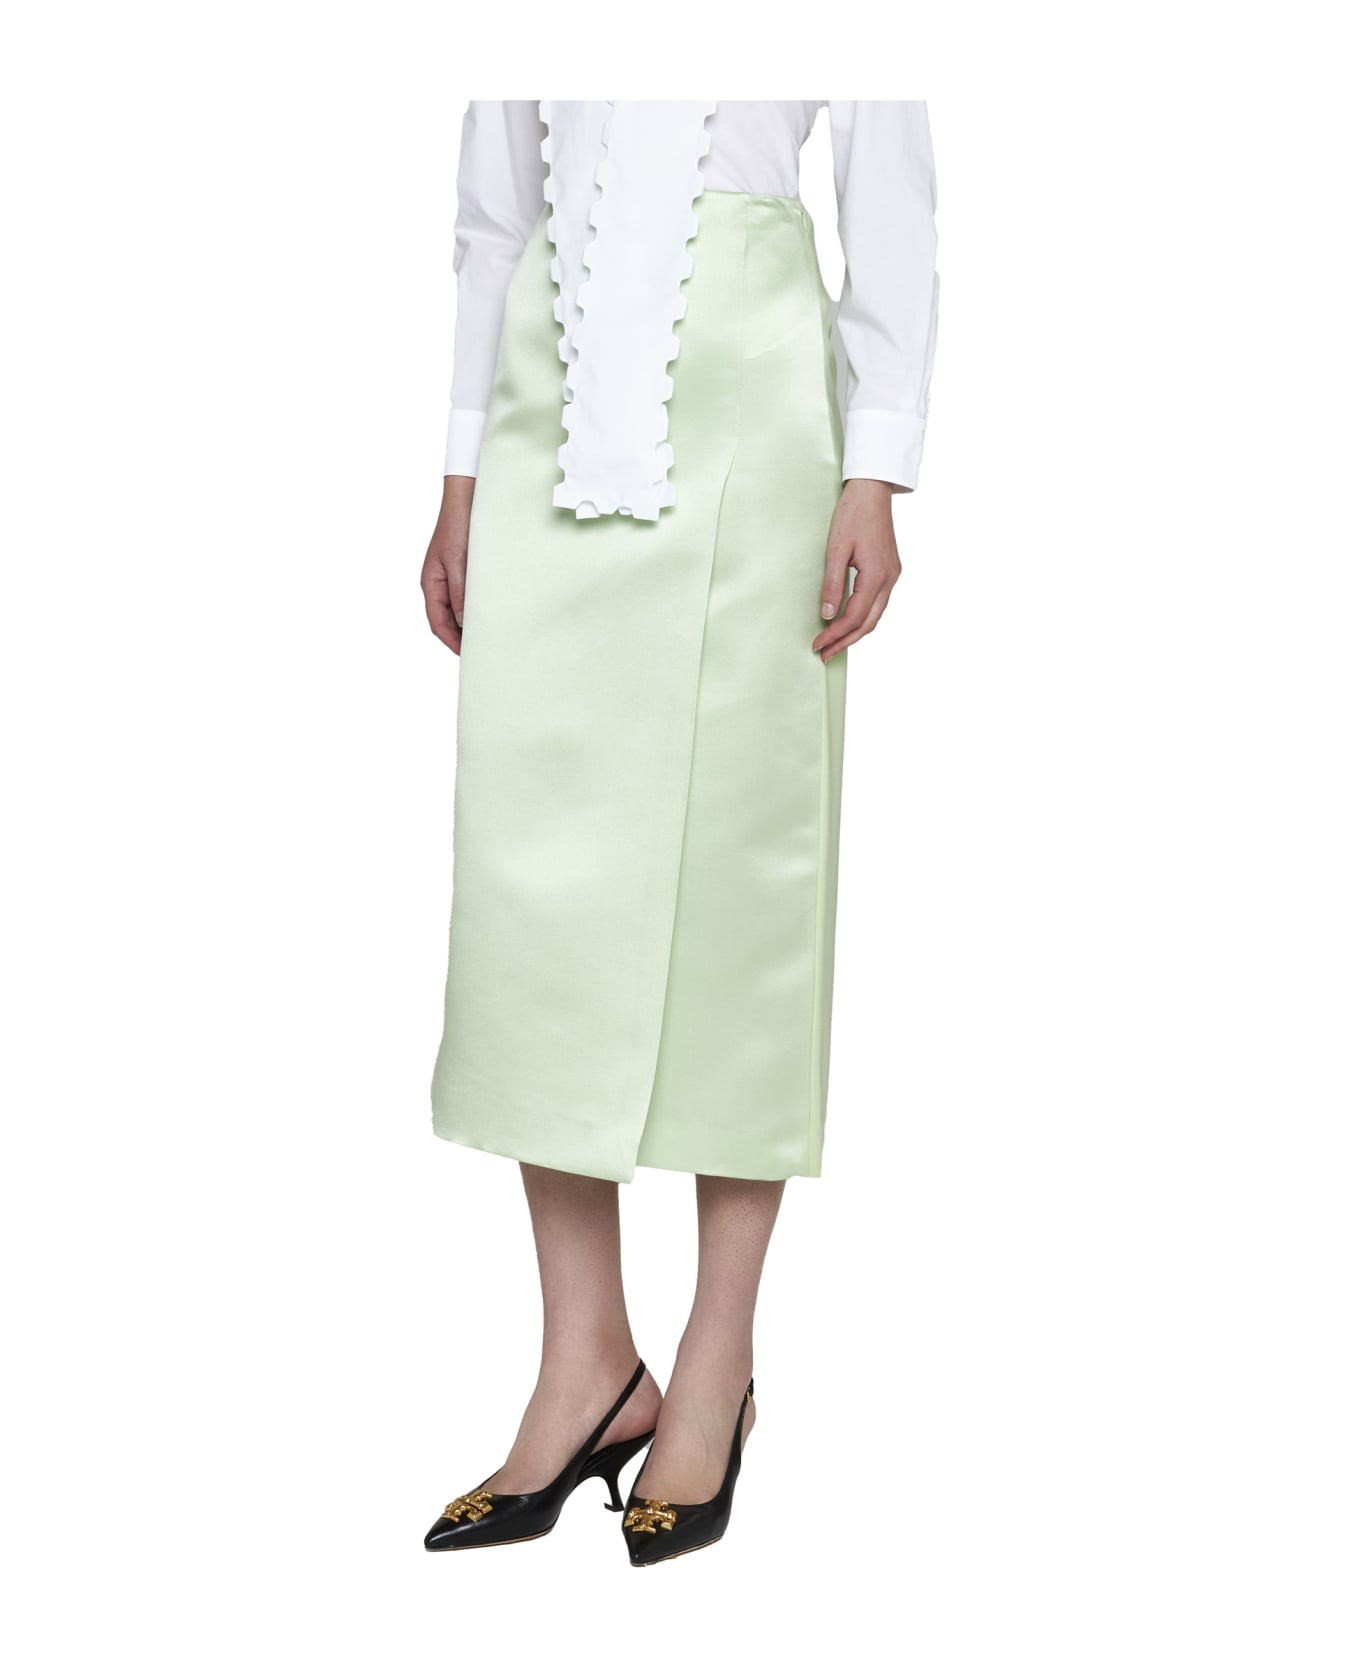 Tory Burch Satin Wrap Skirt - green スカート